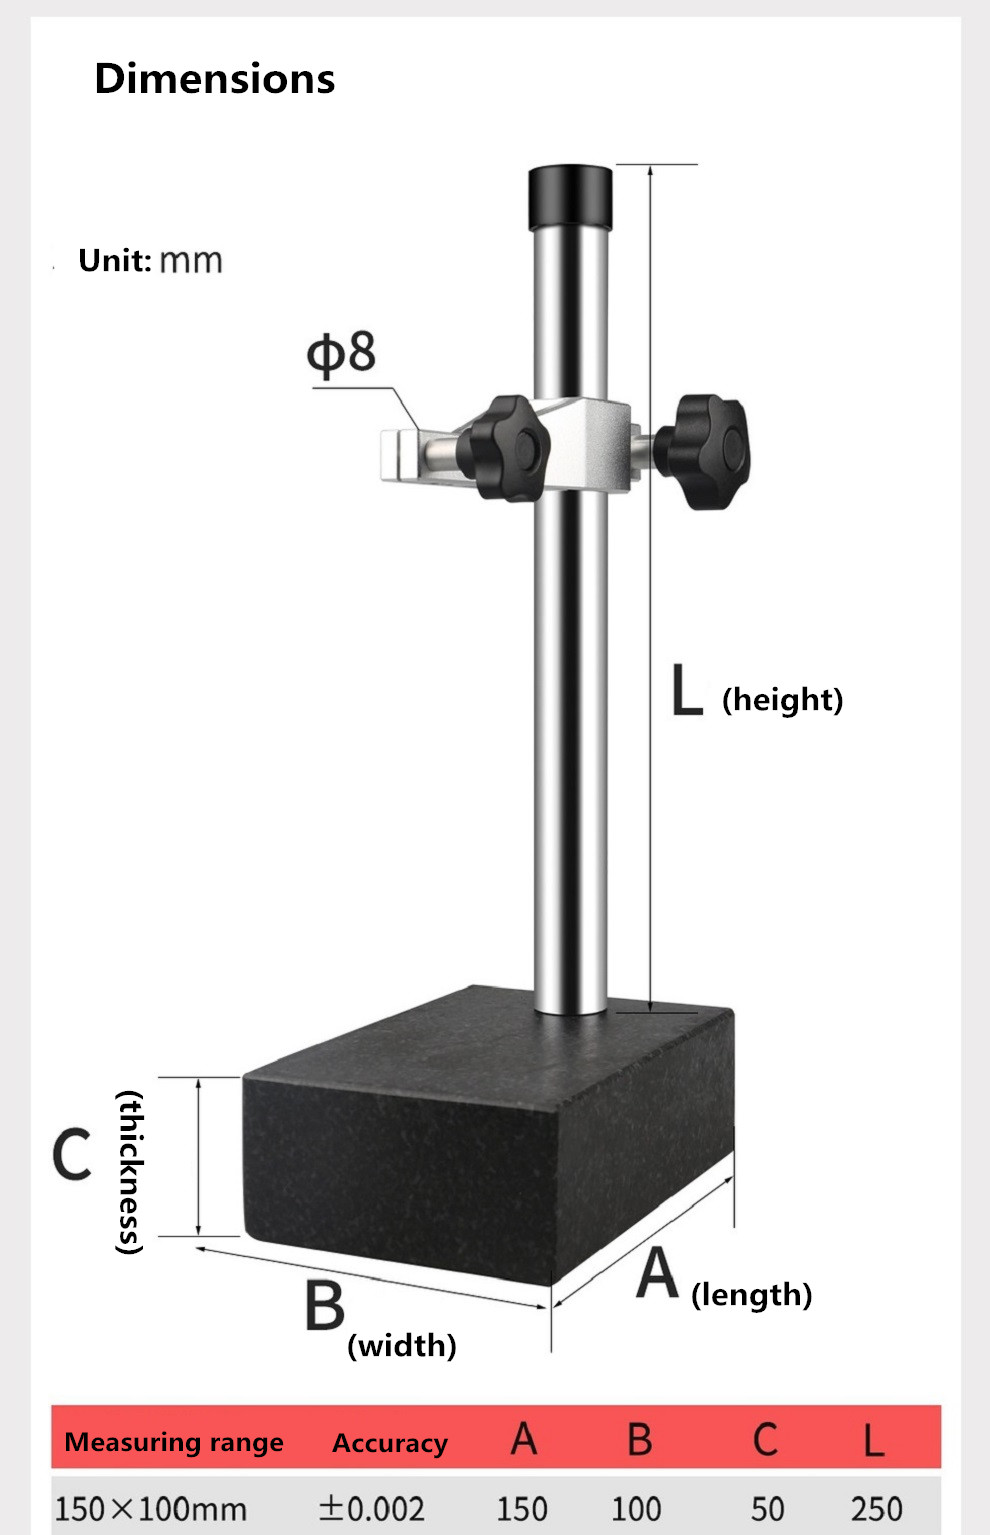 10015050-Marble-Comparison-Test-Table-Bench-Measuring-Platform-0-1mm-Dial-Gauge-Indicator-Height-Sta-1737189